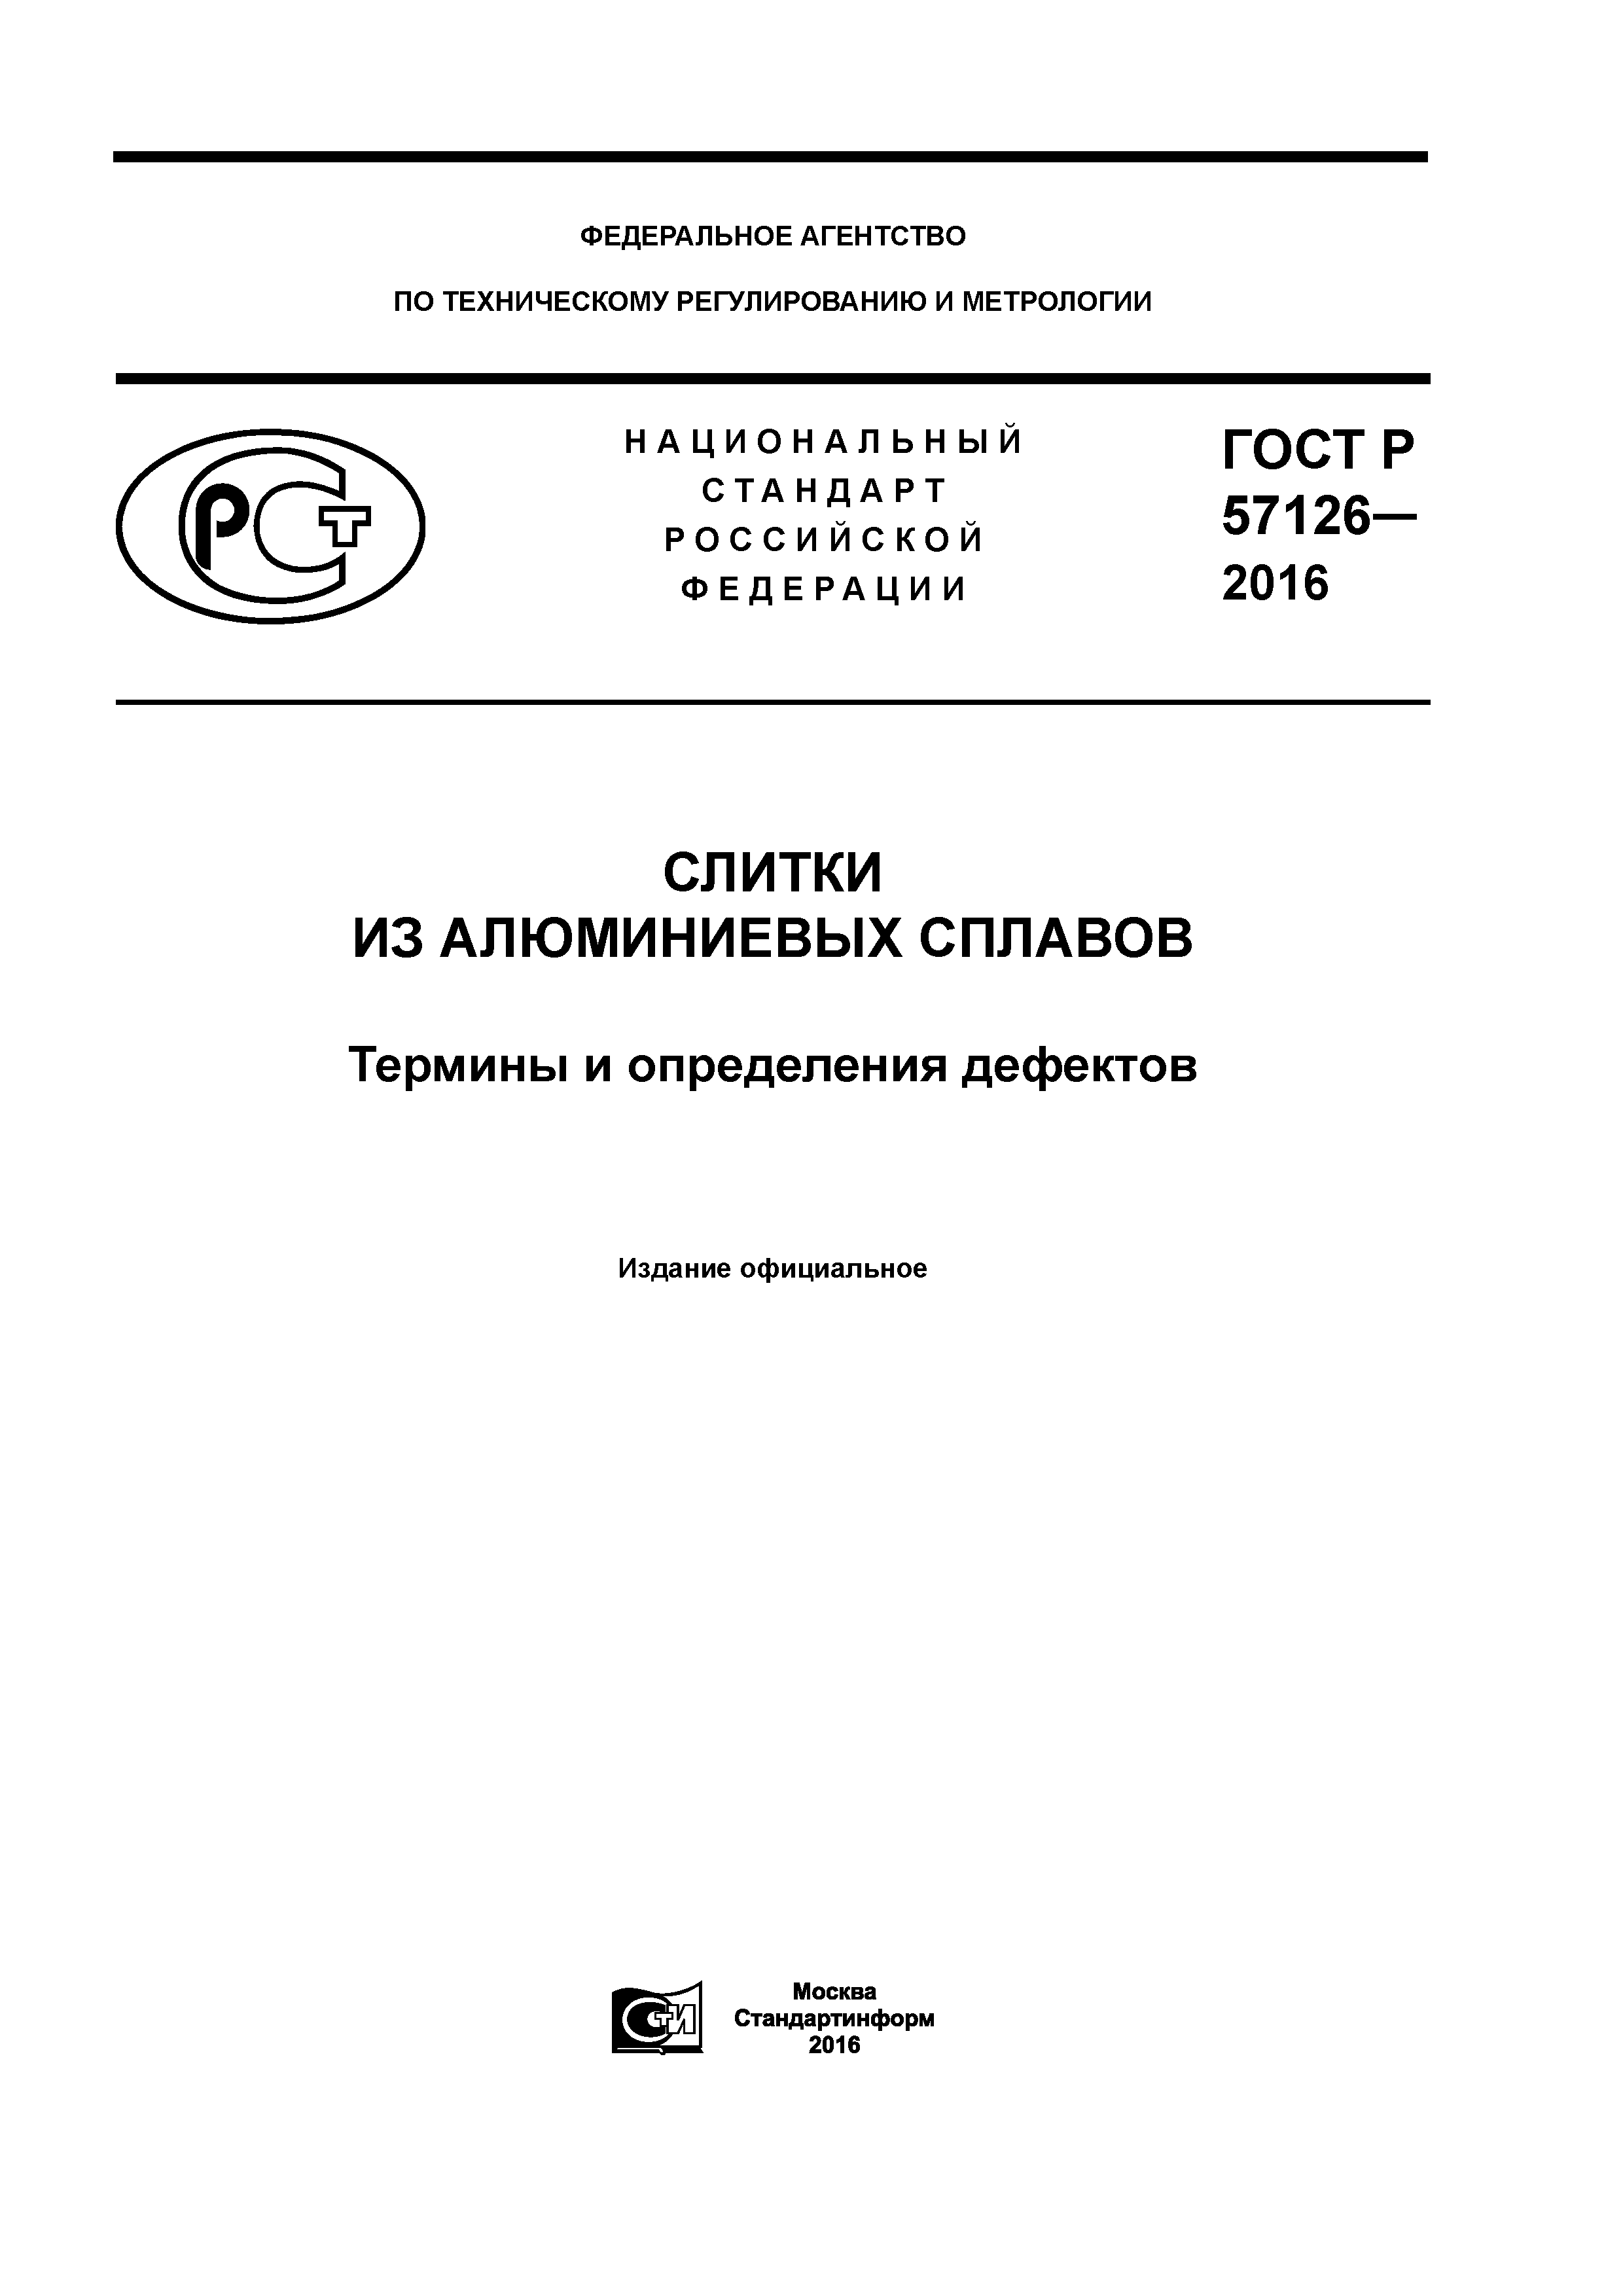 ГОСТ Р 57126-2016